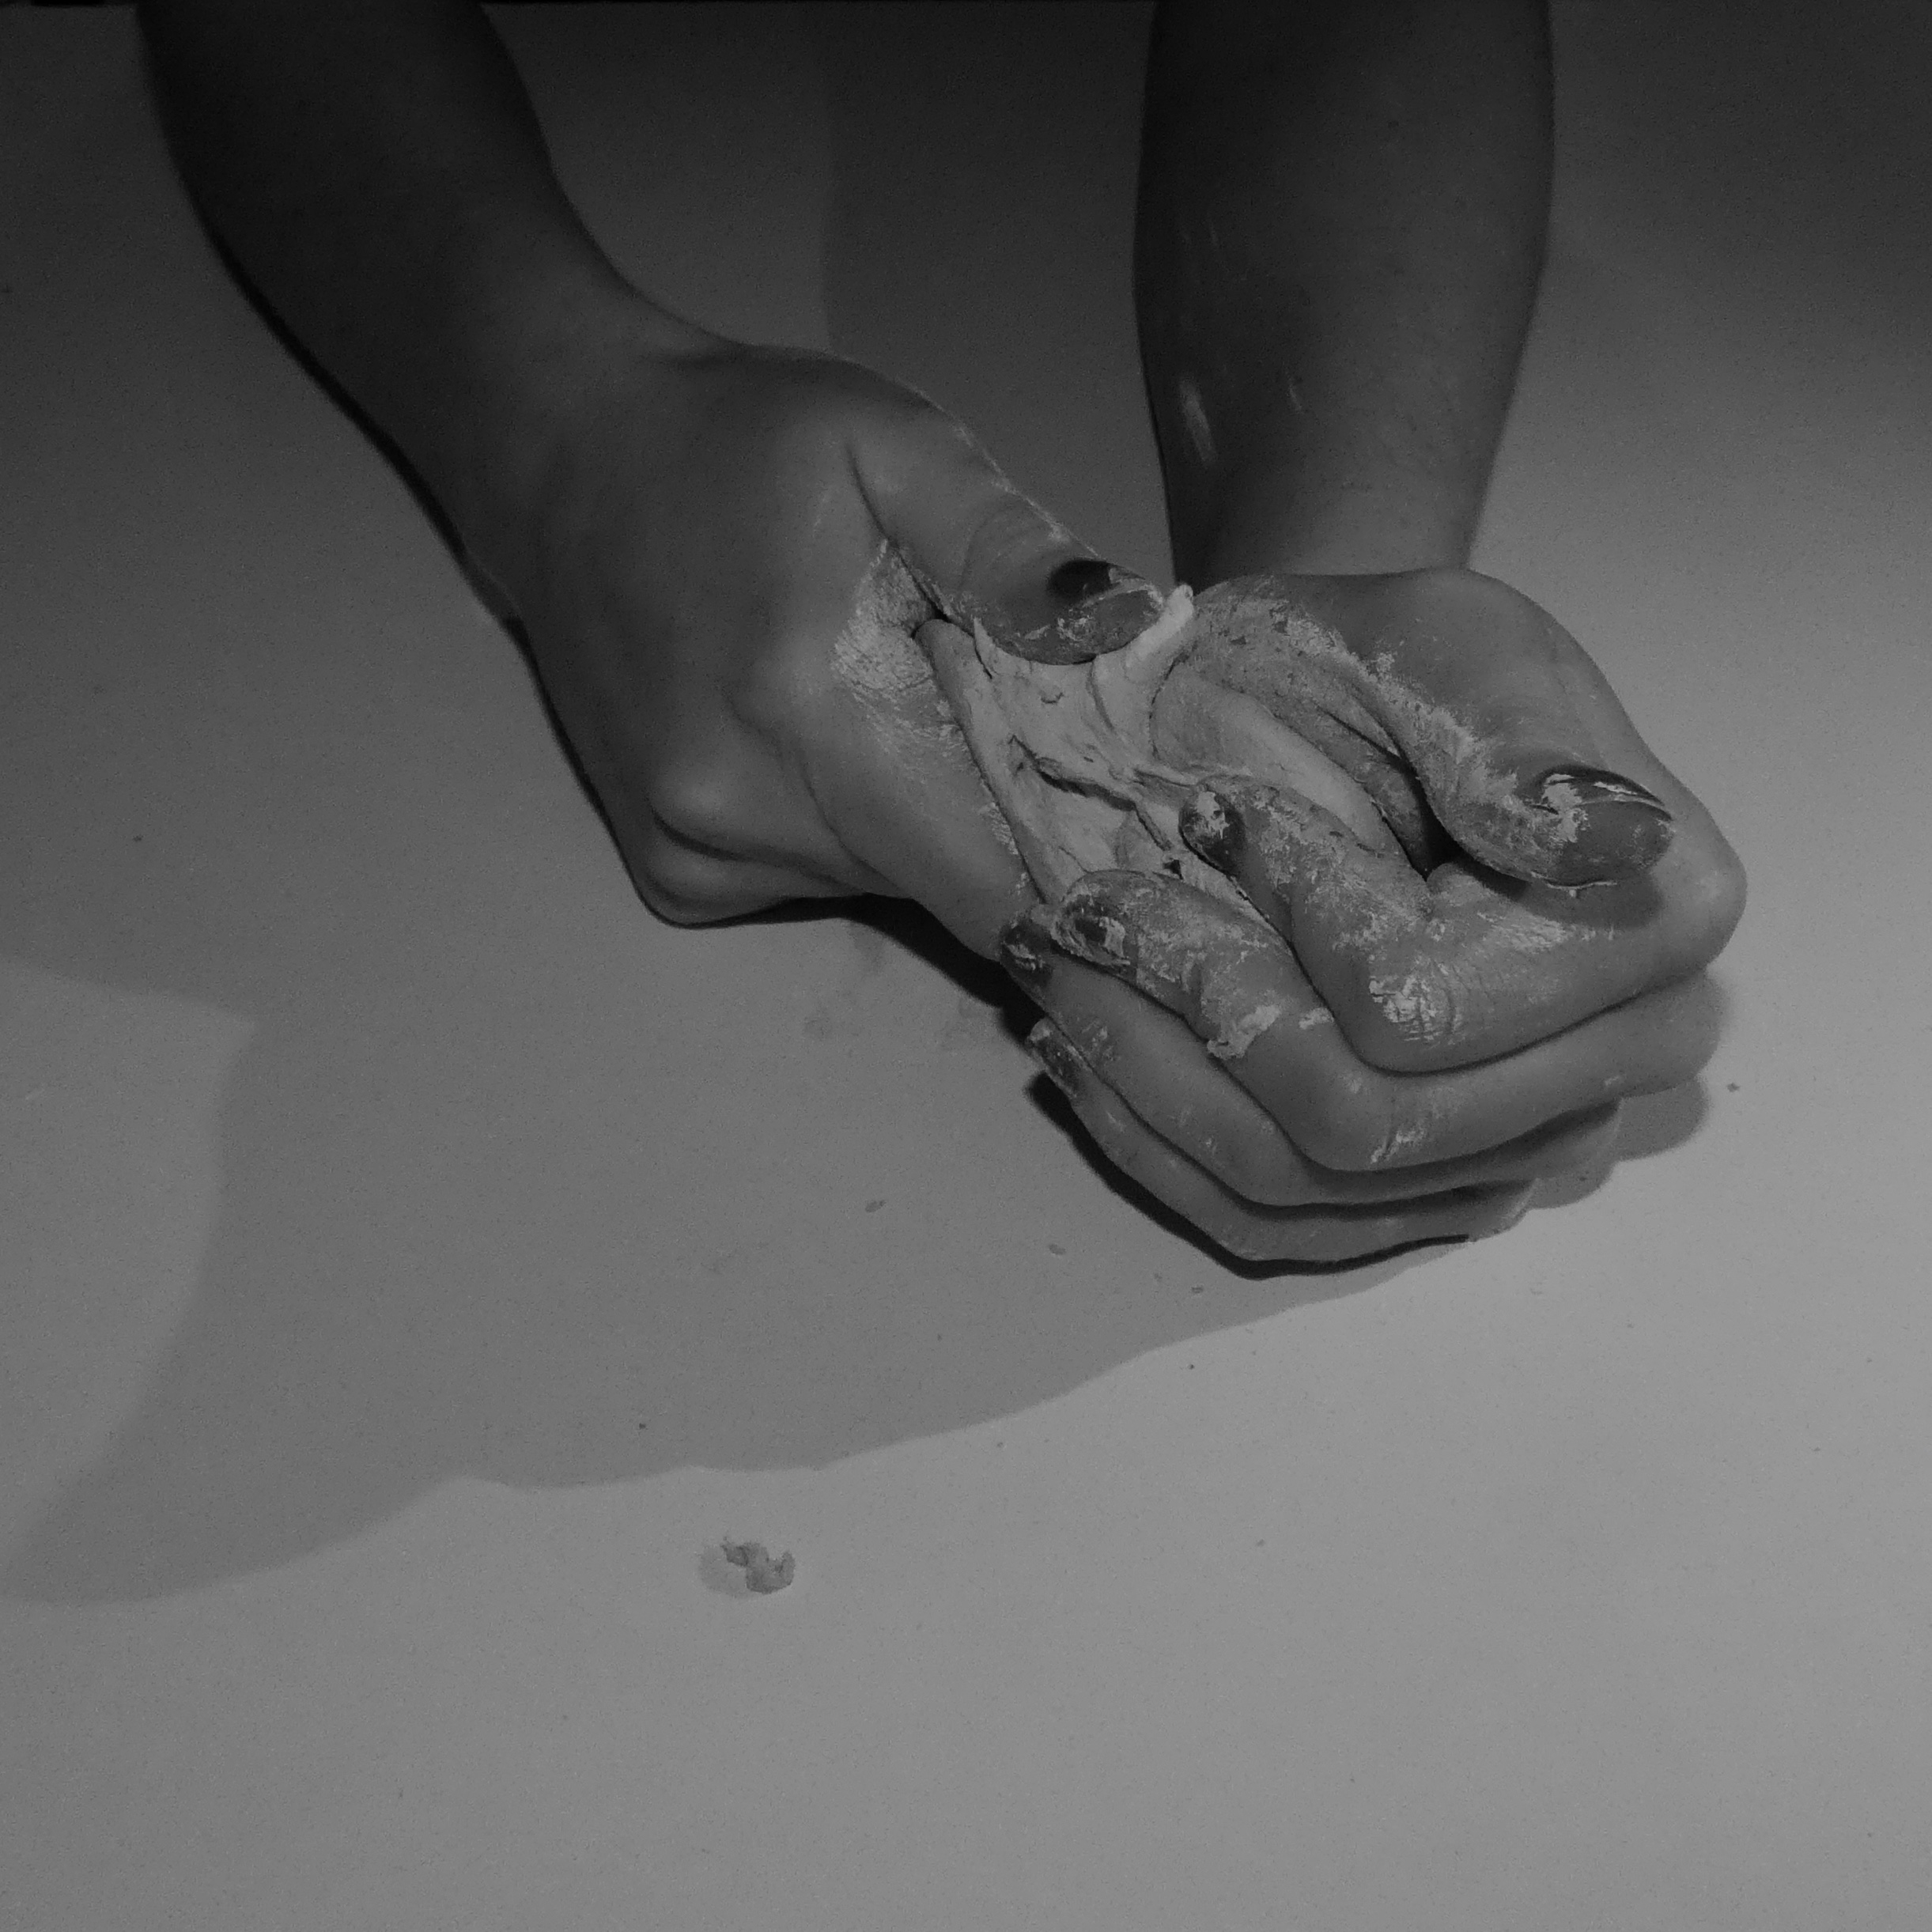 Video by Megan Petts of sculpting hands.